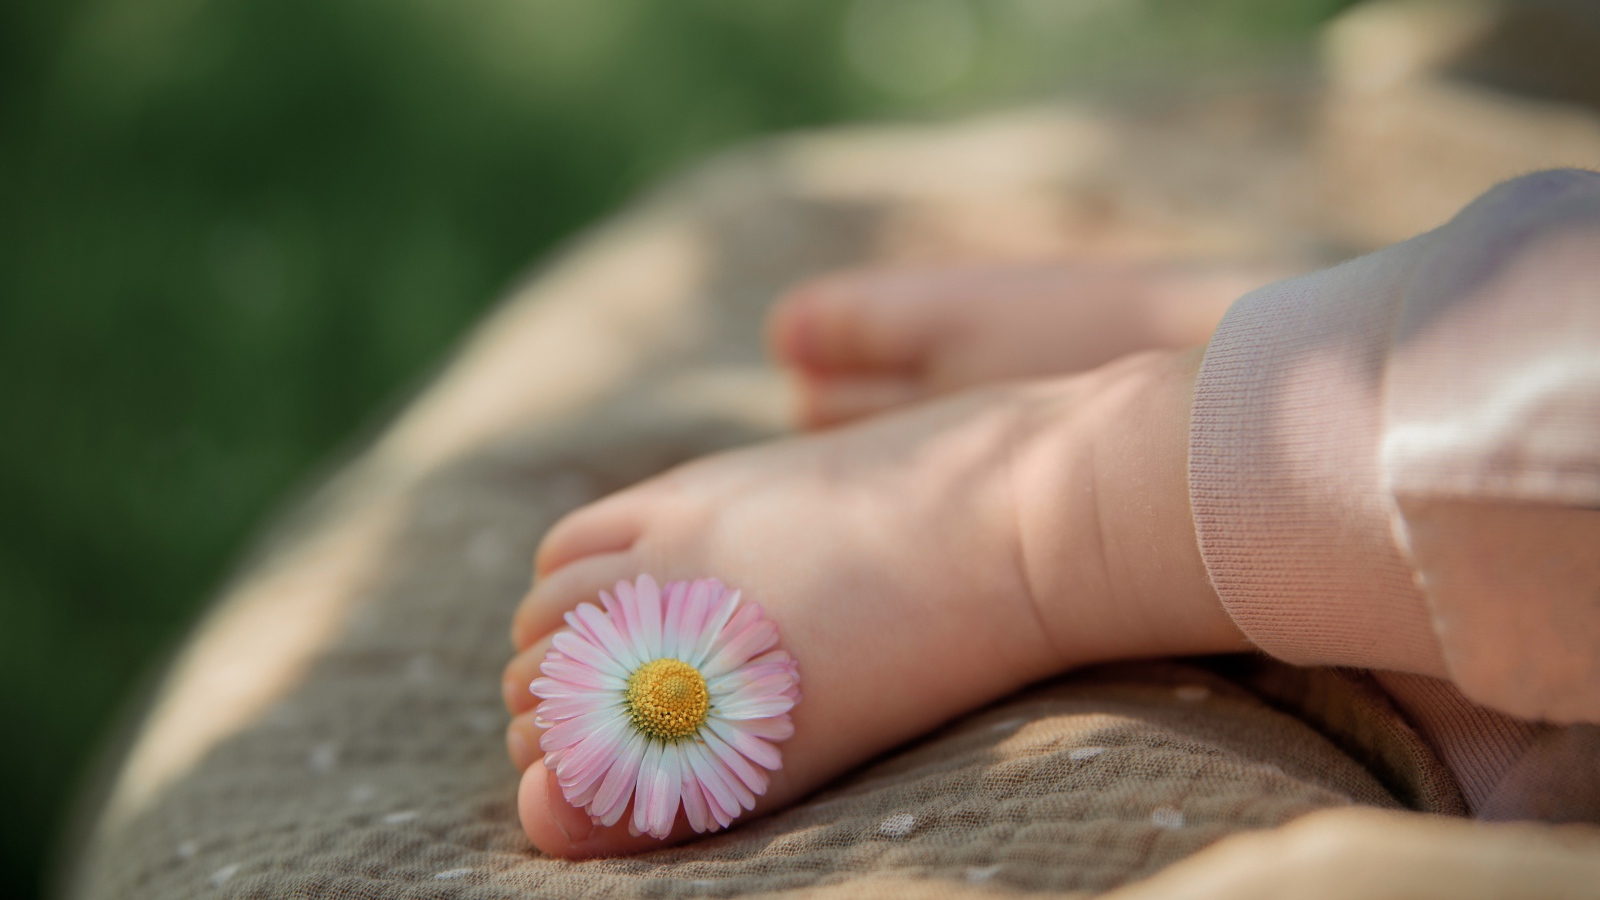 Нога ребенка с цветком маргаритки